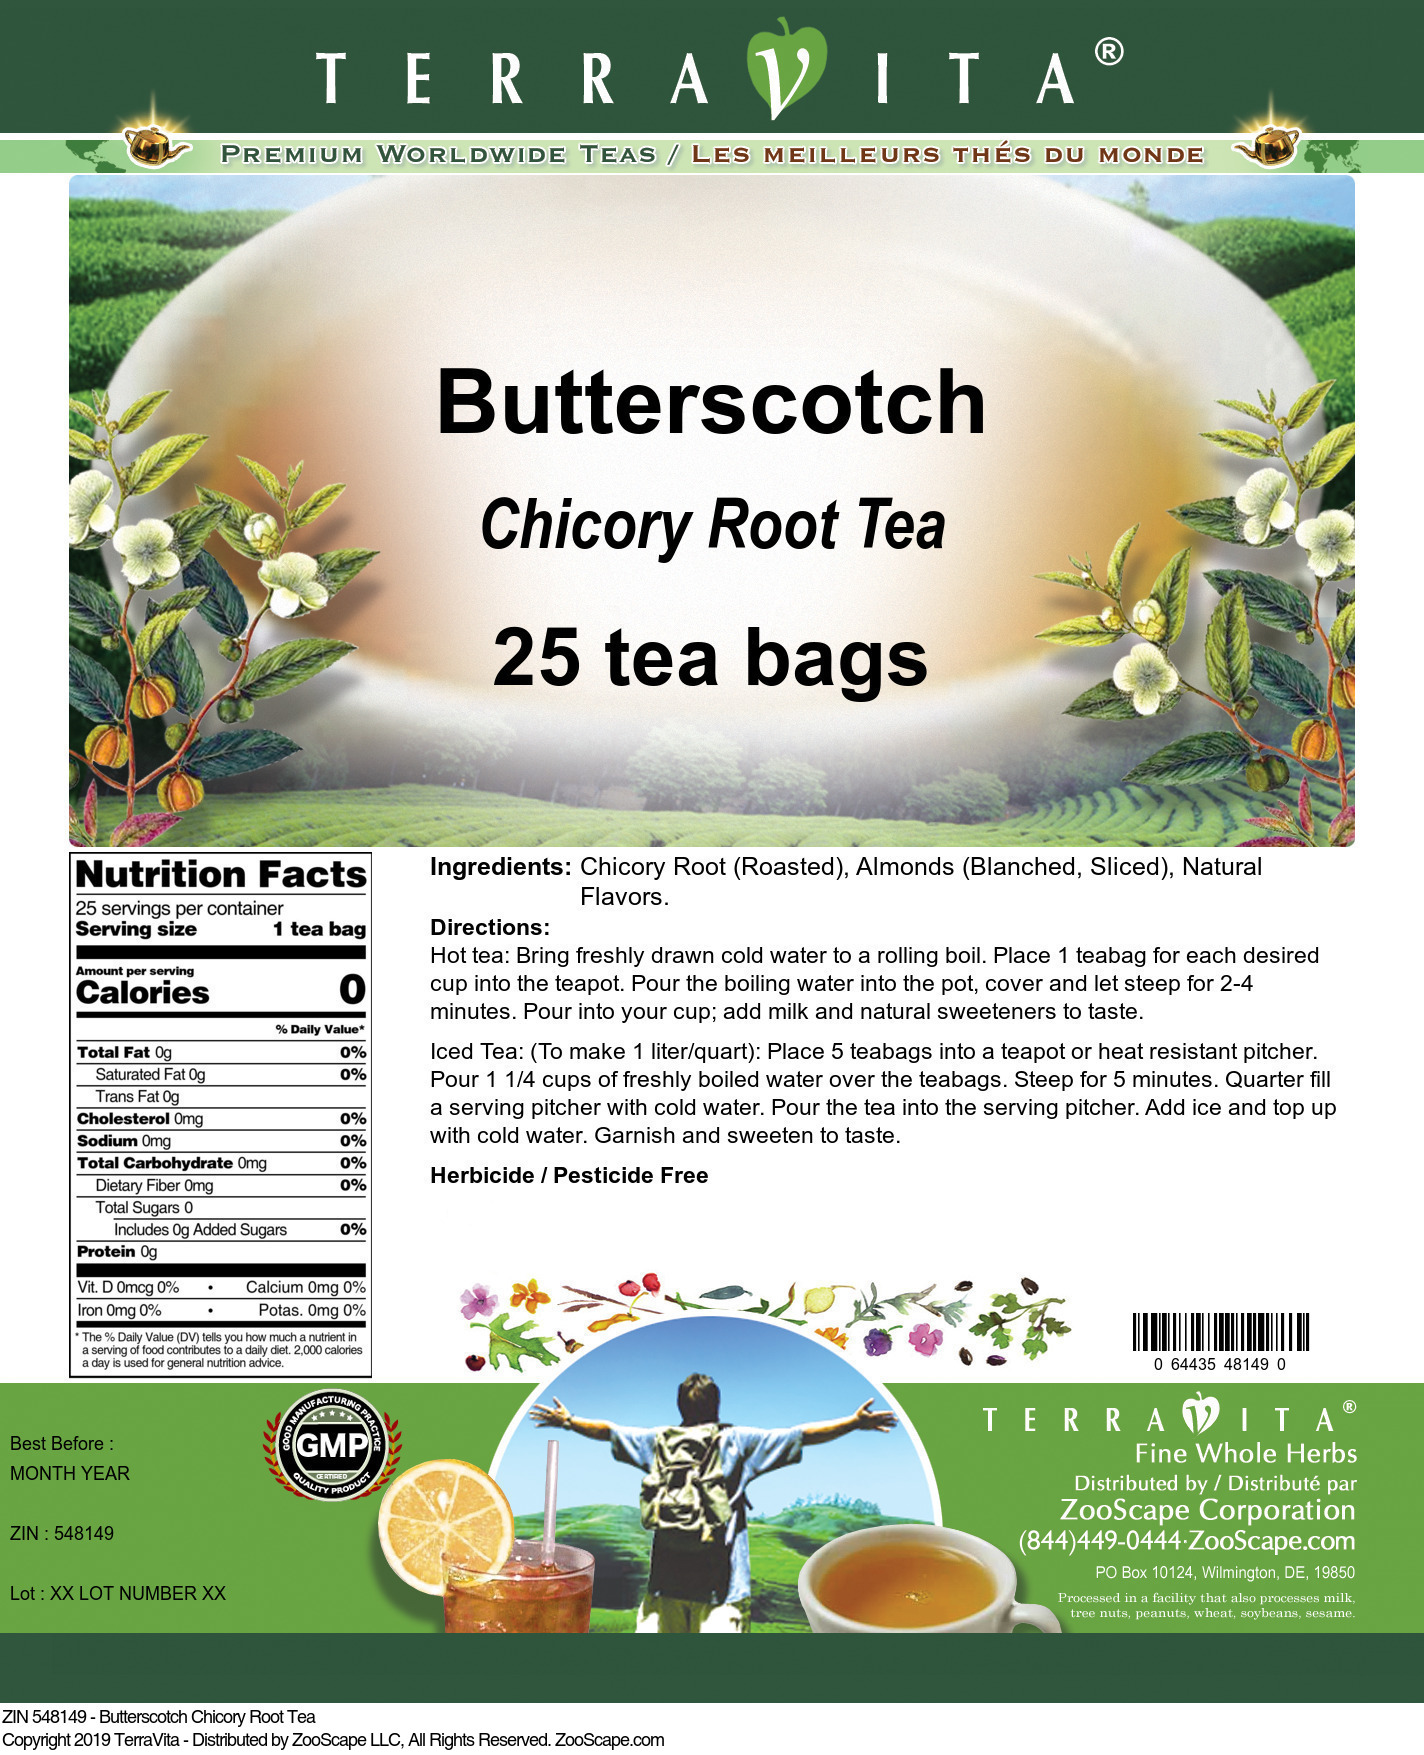 Butterscotch Chicory Root Tea - Label